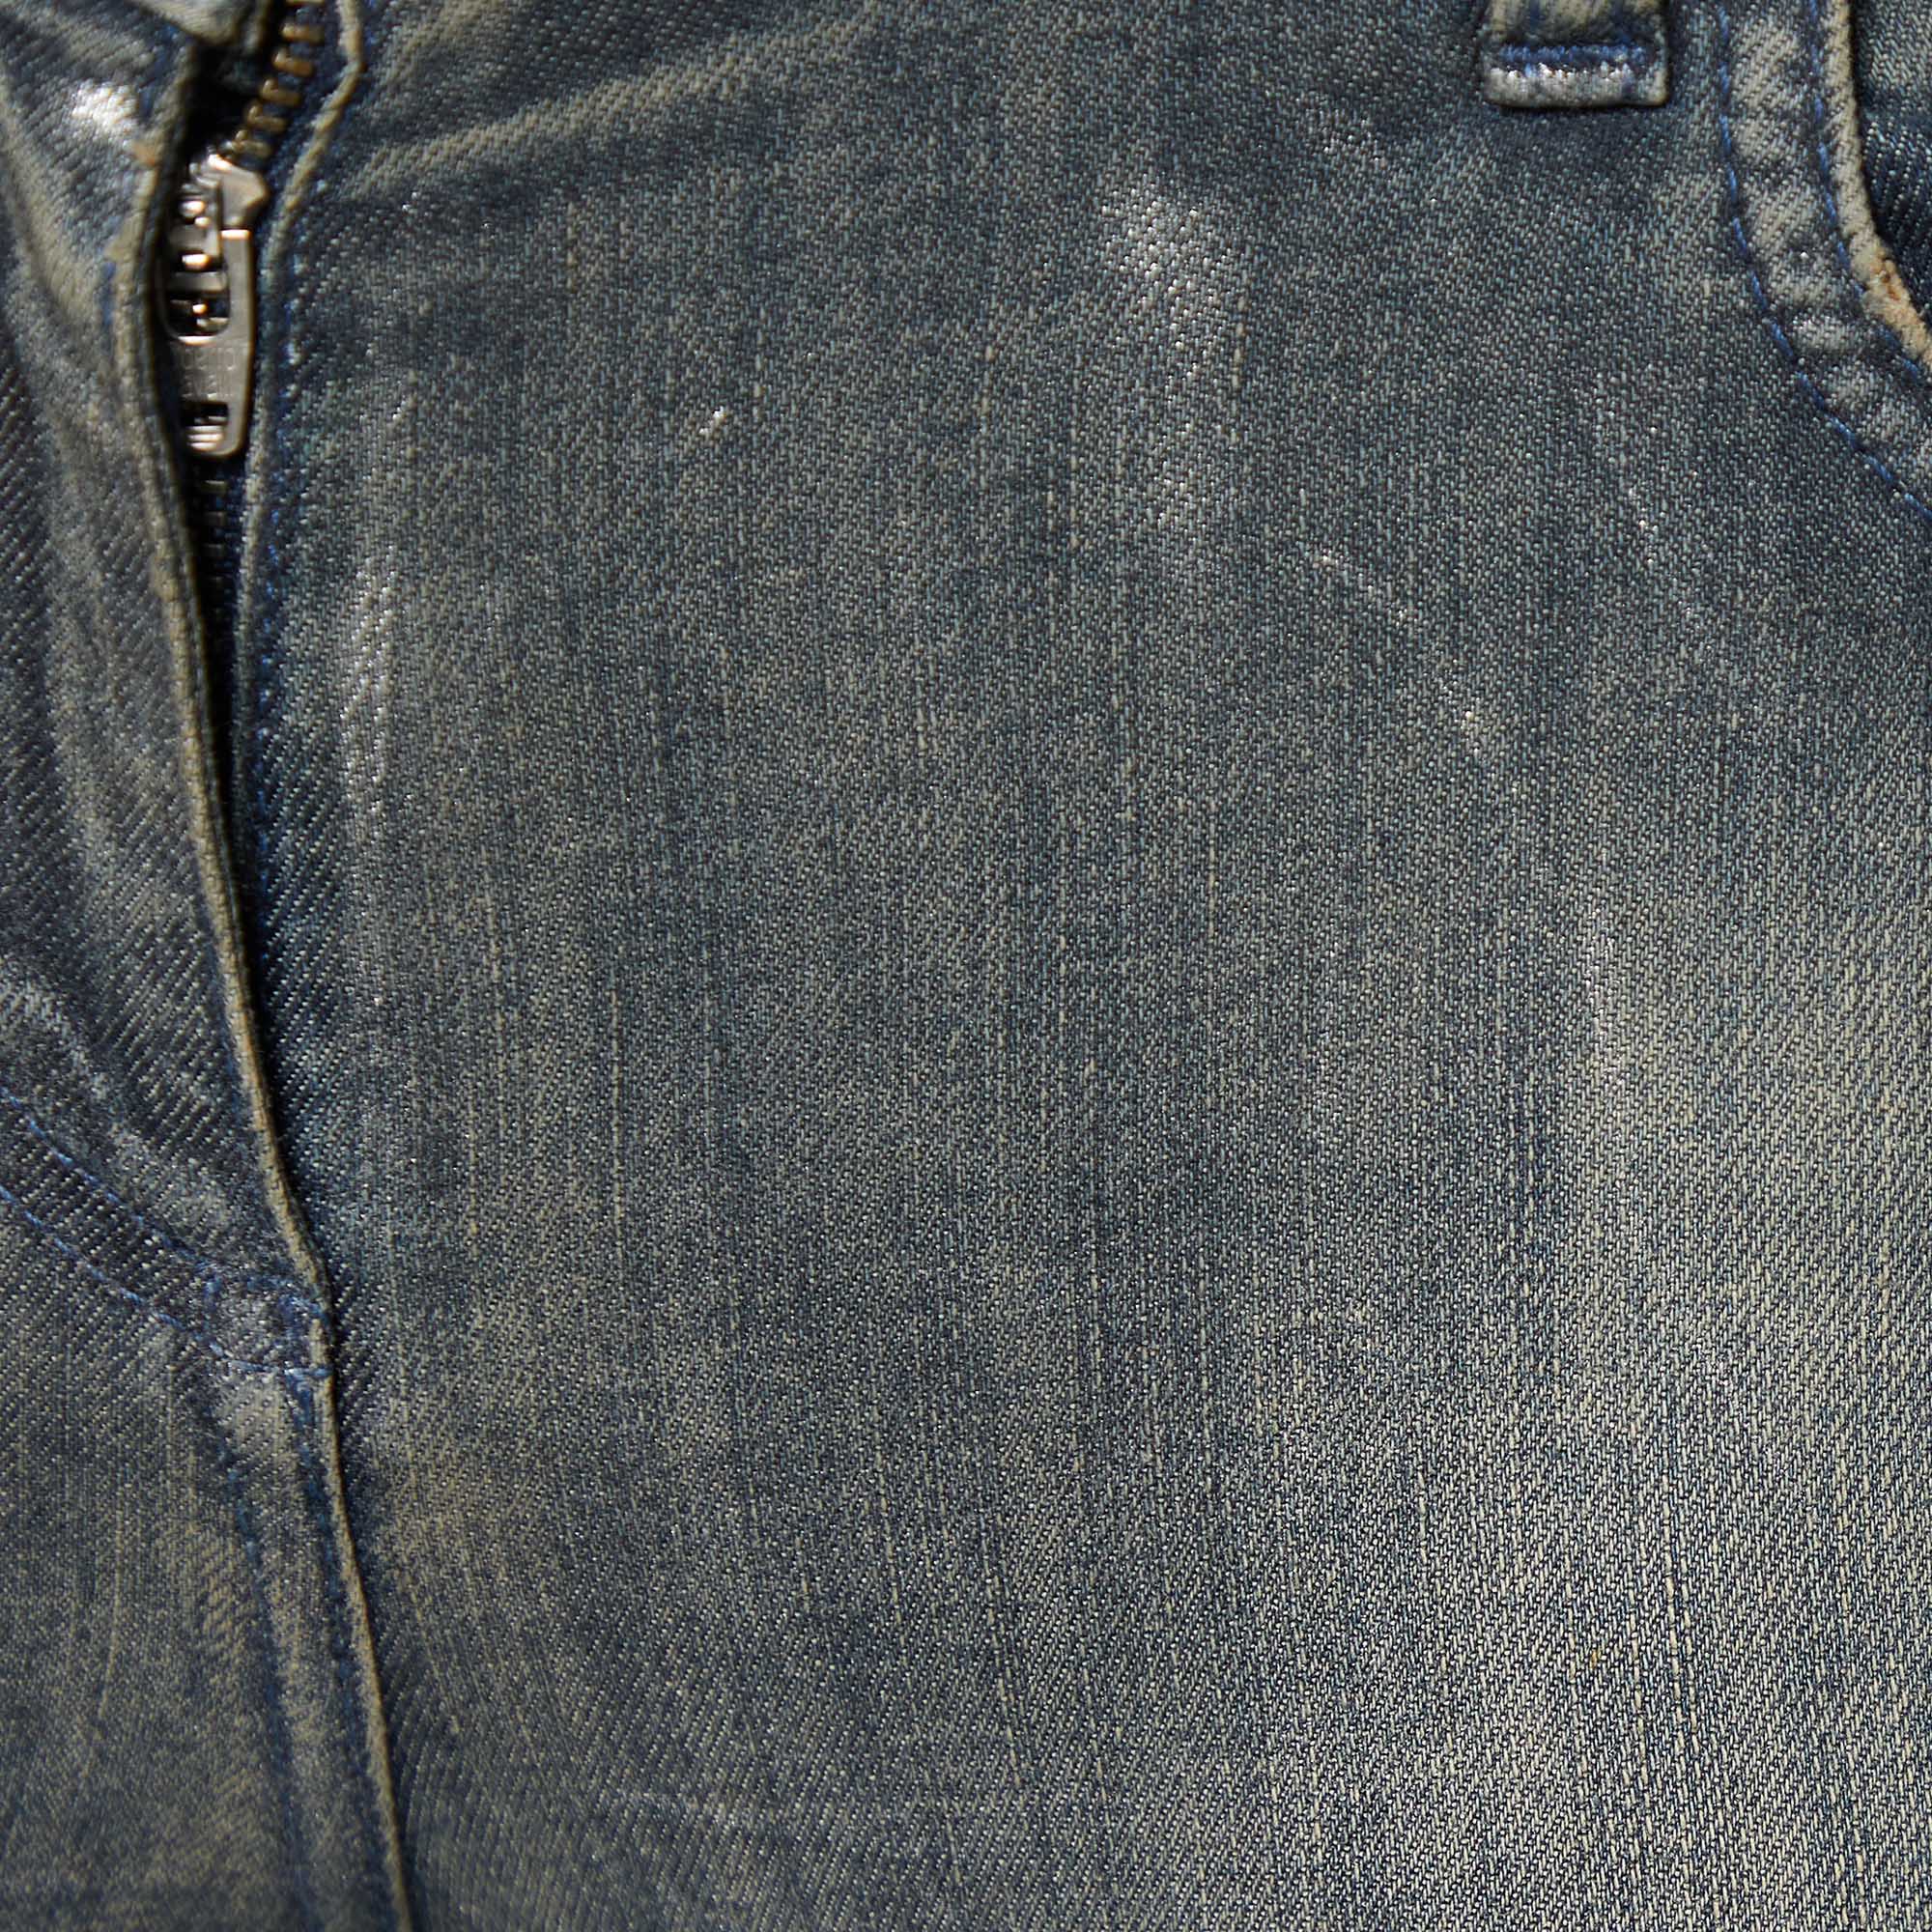 Roberto Cavalli Light Blue Faded Denim Skinny Jeans M